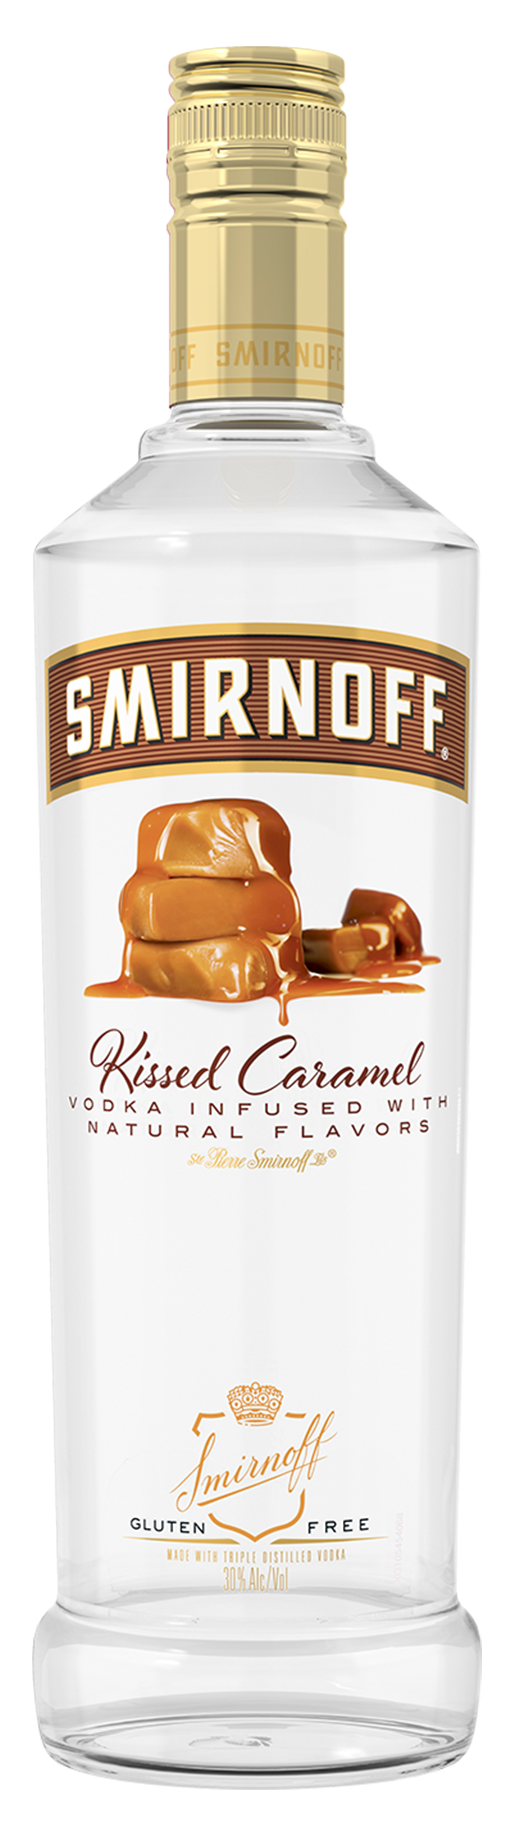 Smirnoff - Kissed Caramel Vodka